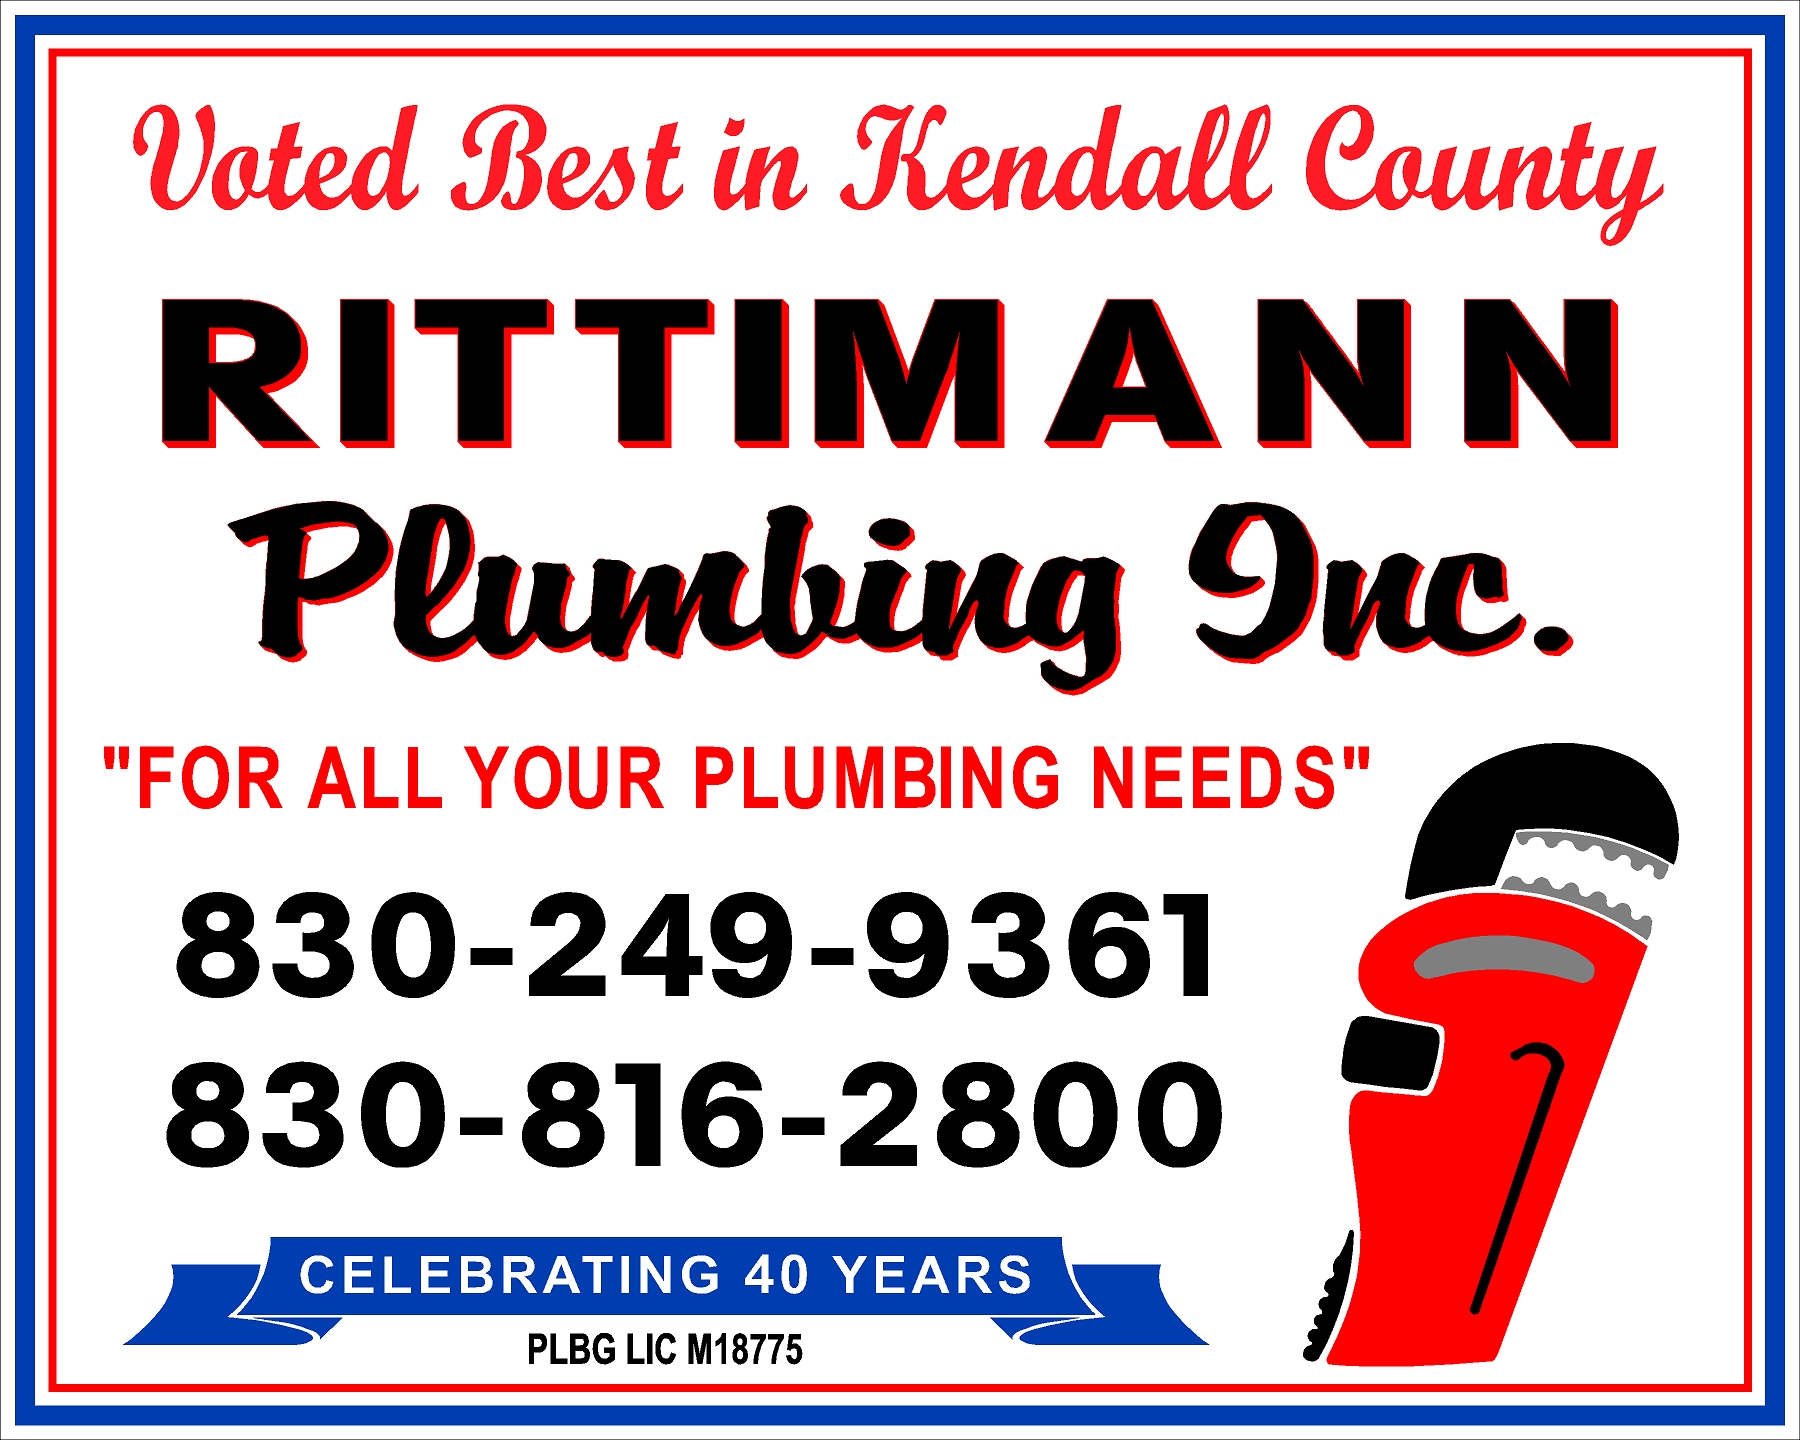 Rittiman Plumbing, Inc.